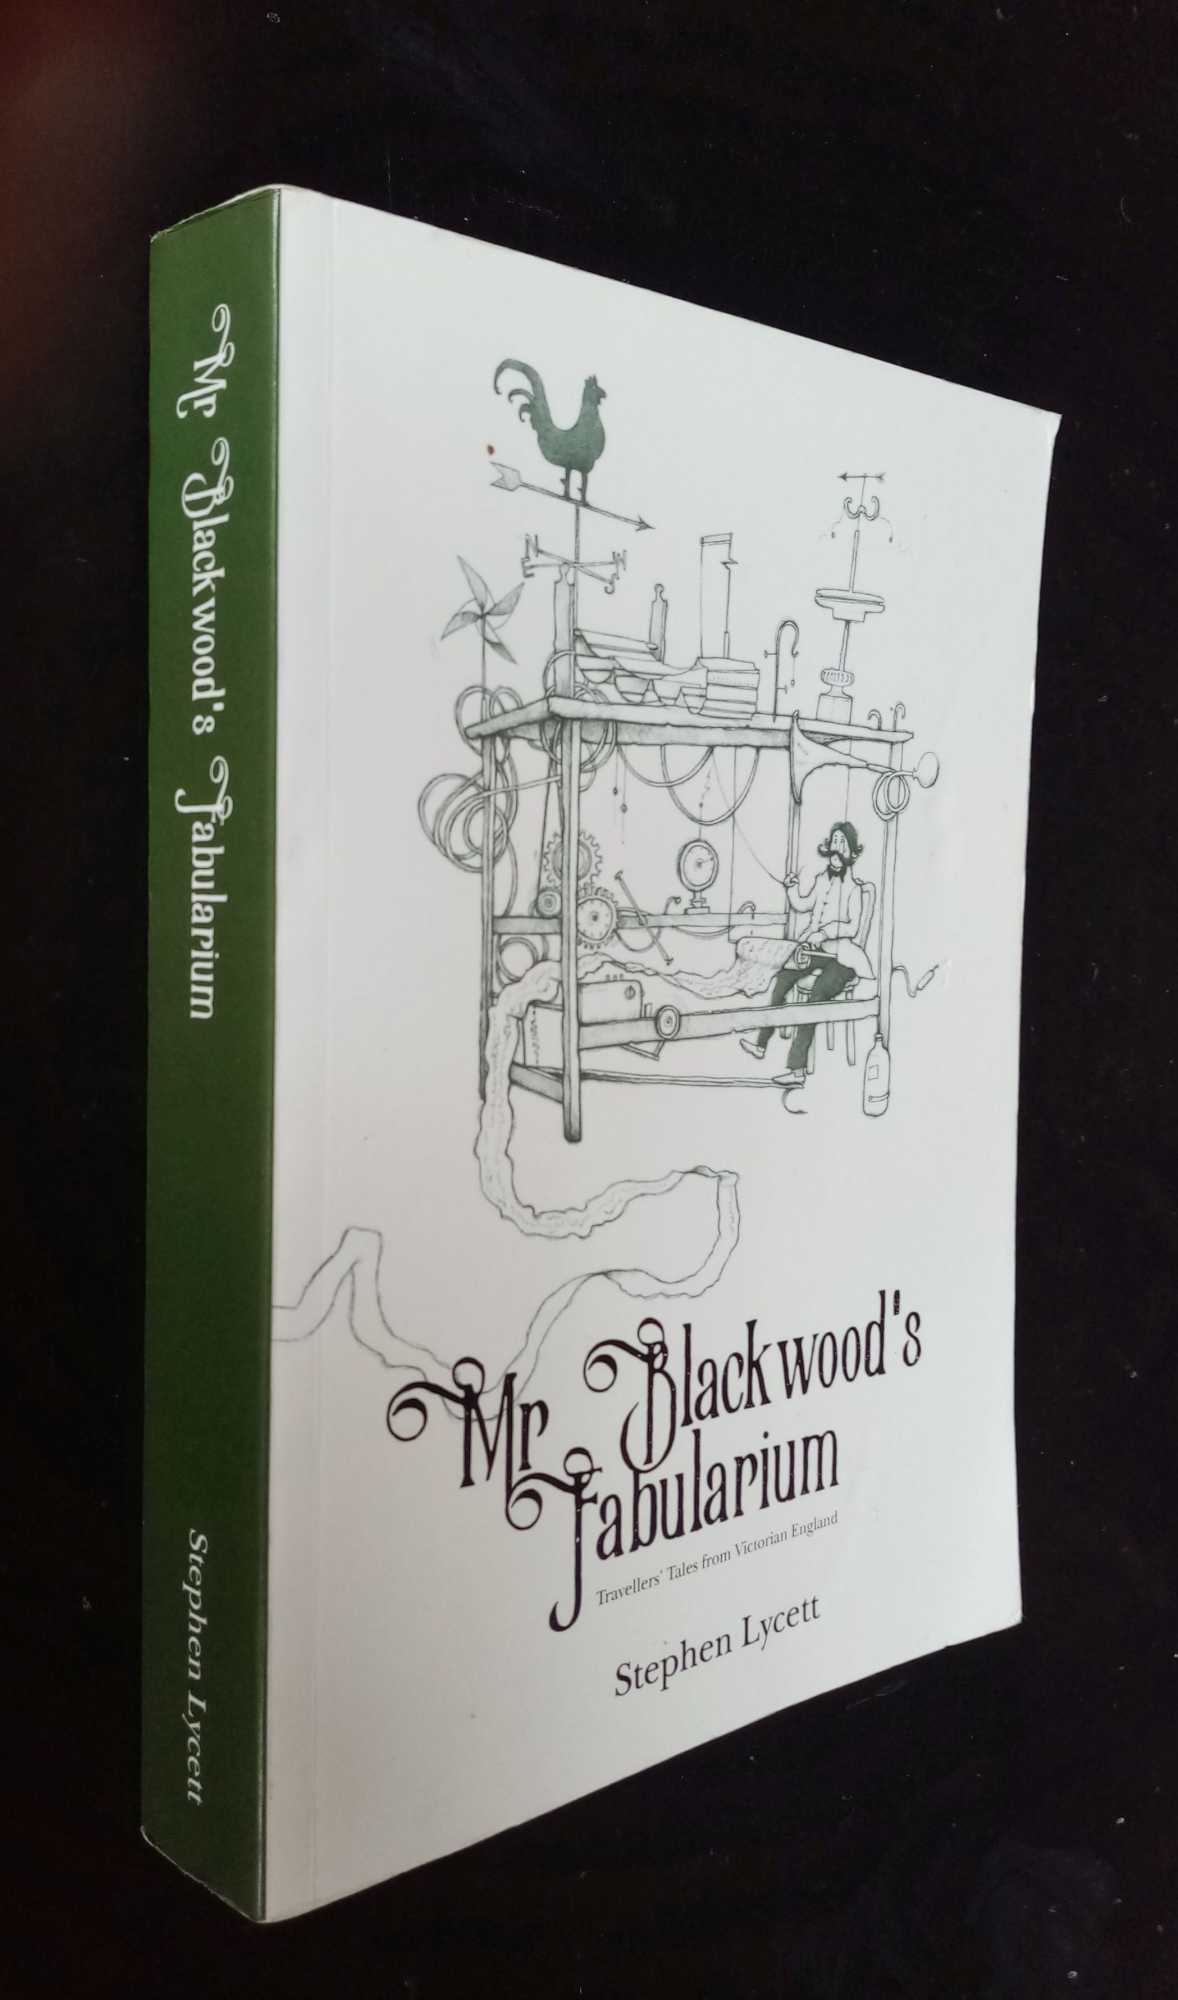 Stephen Lycett - Mr Blackwood's Fabularium   SIGNED/ Inscribed